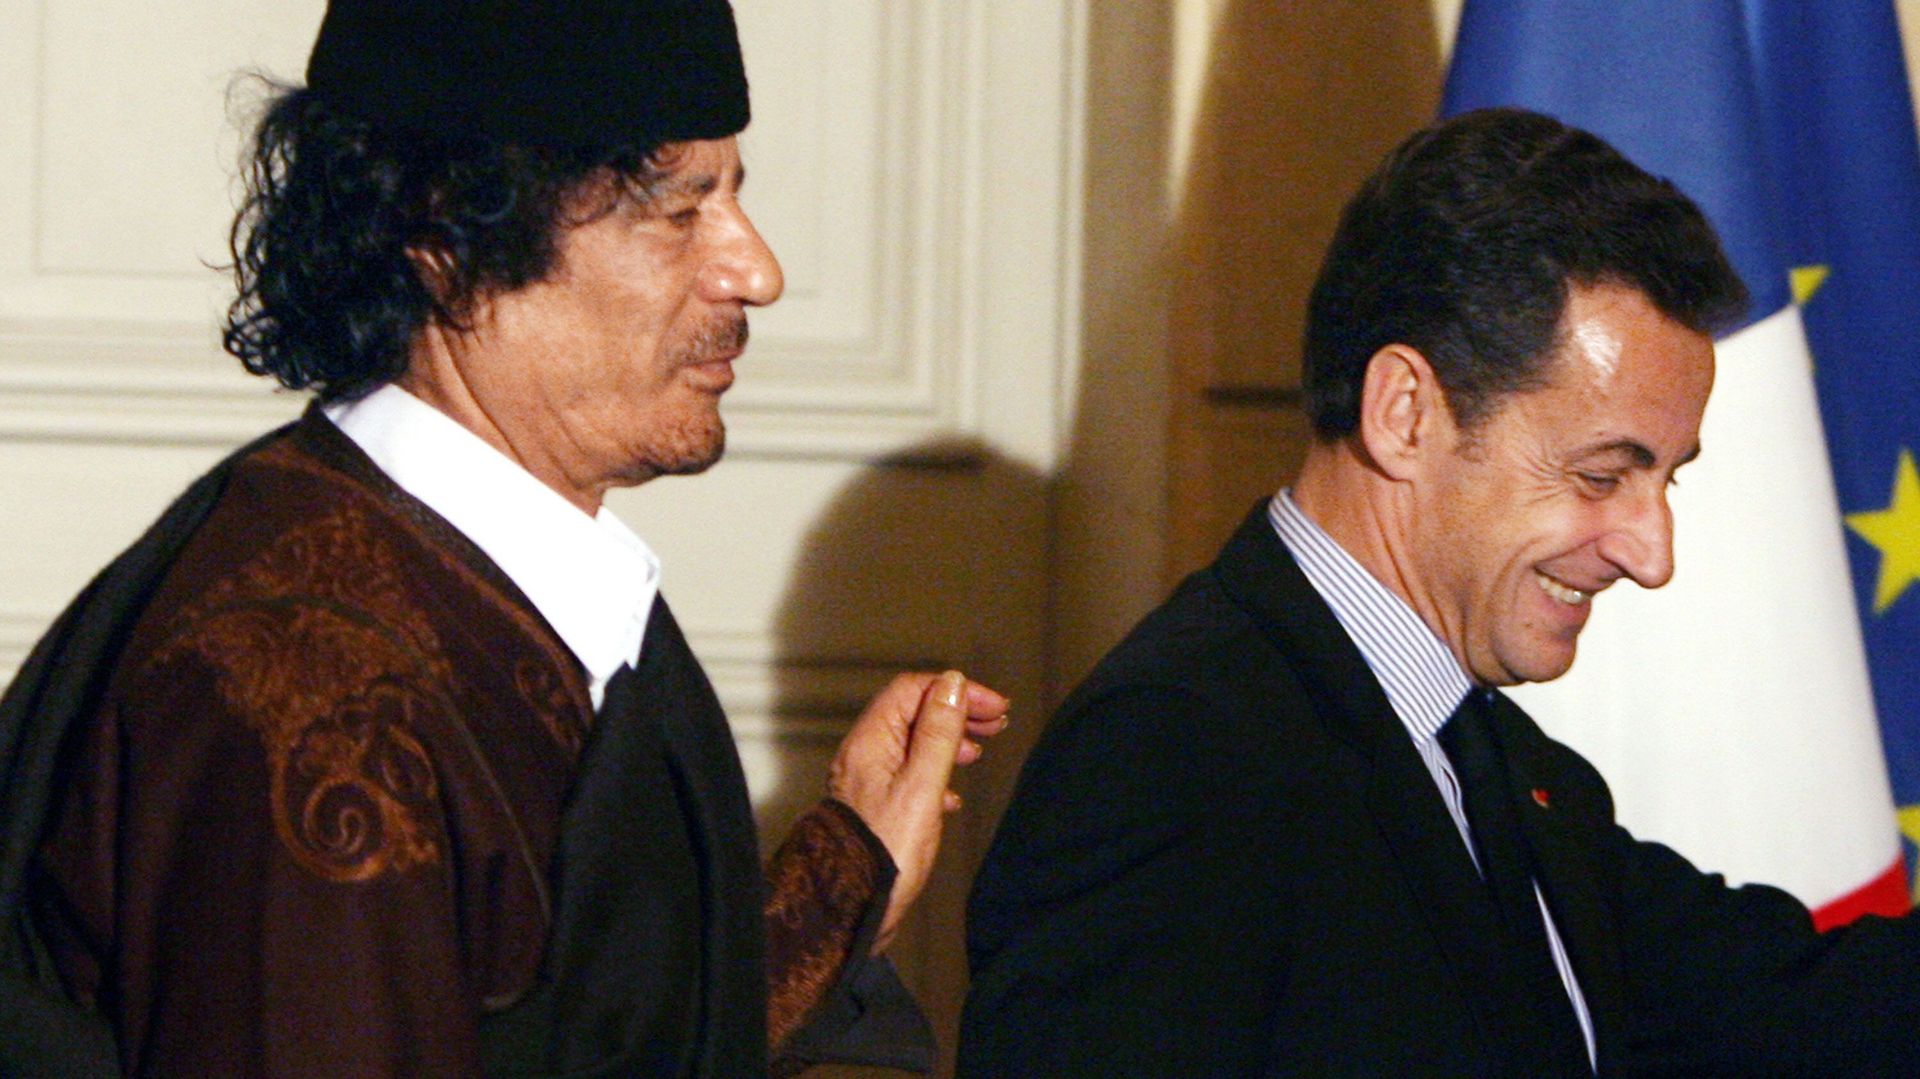 Campagne 2007 de Nicolas Sarkozy financée par Kadhafi: la "preuve" de Mediapart